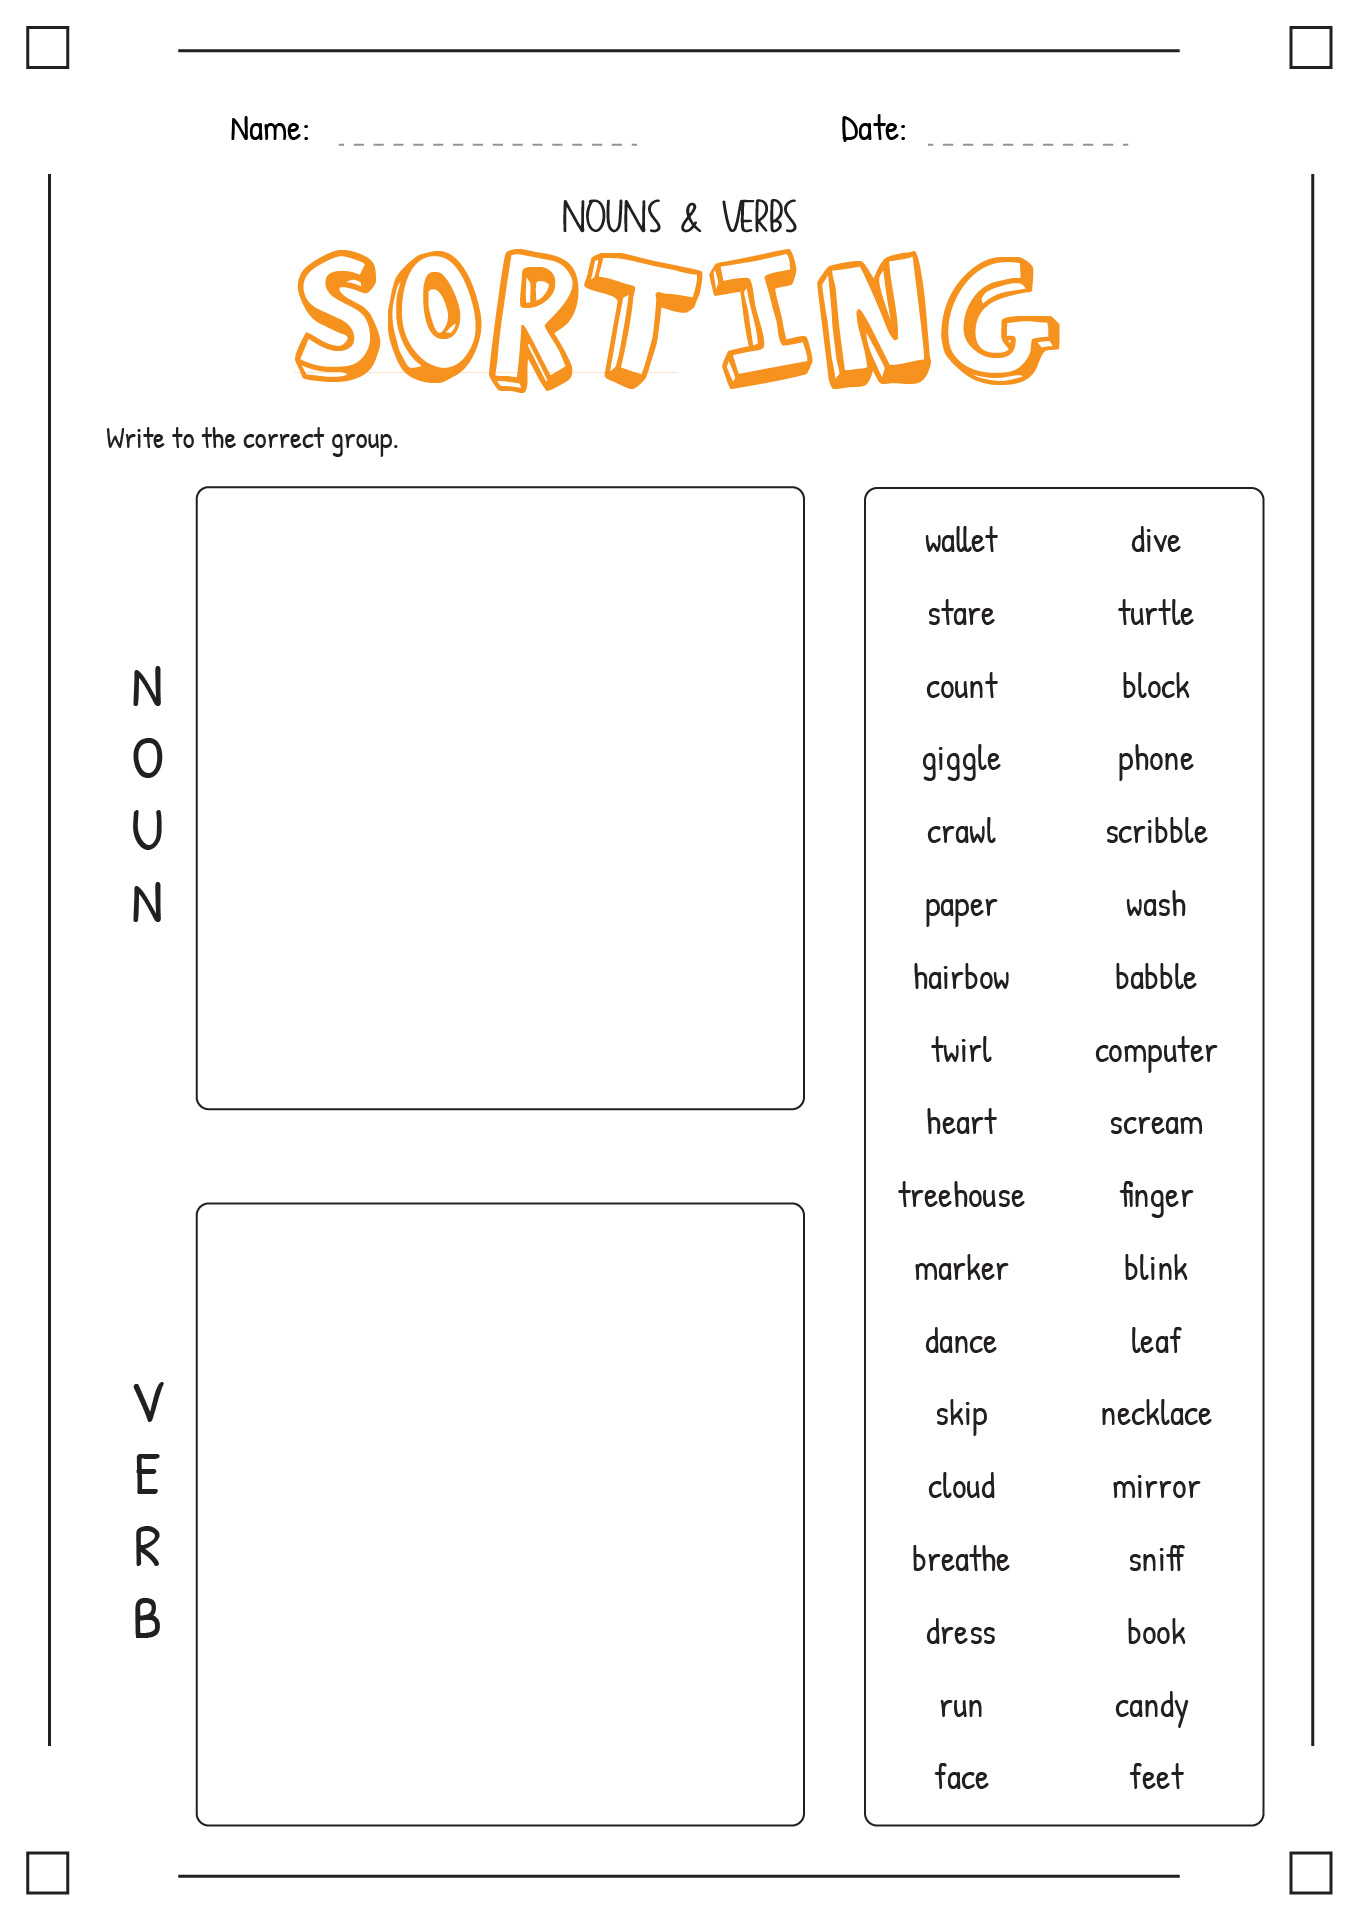 Nouns and Verbs Sorting Worksheet Image